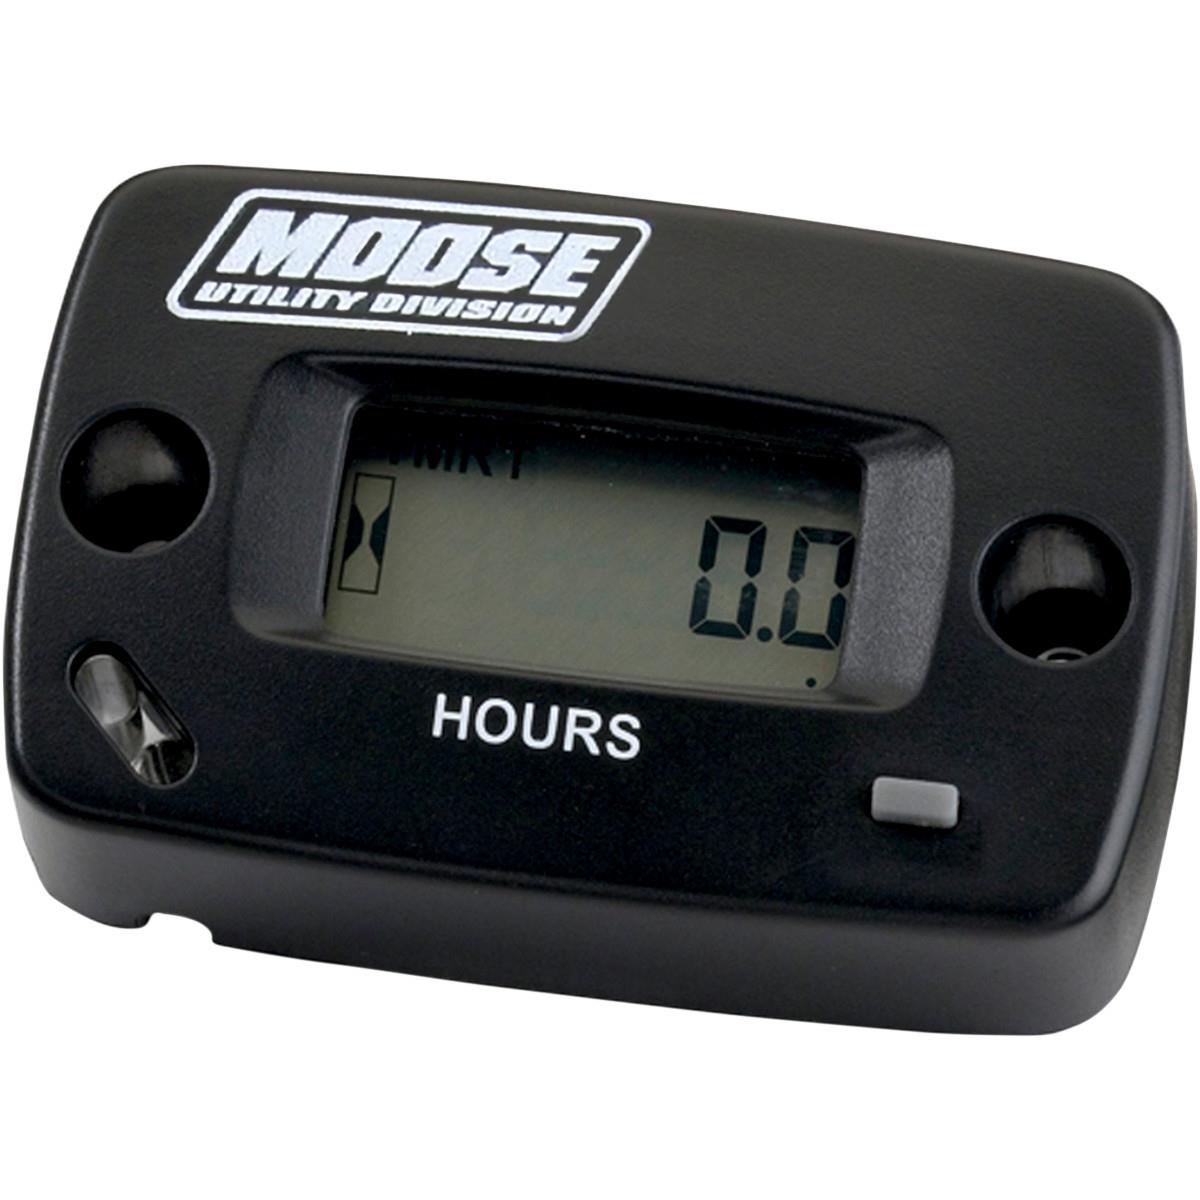 Moose Racing Hour Meter  wireless and resetable